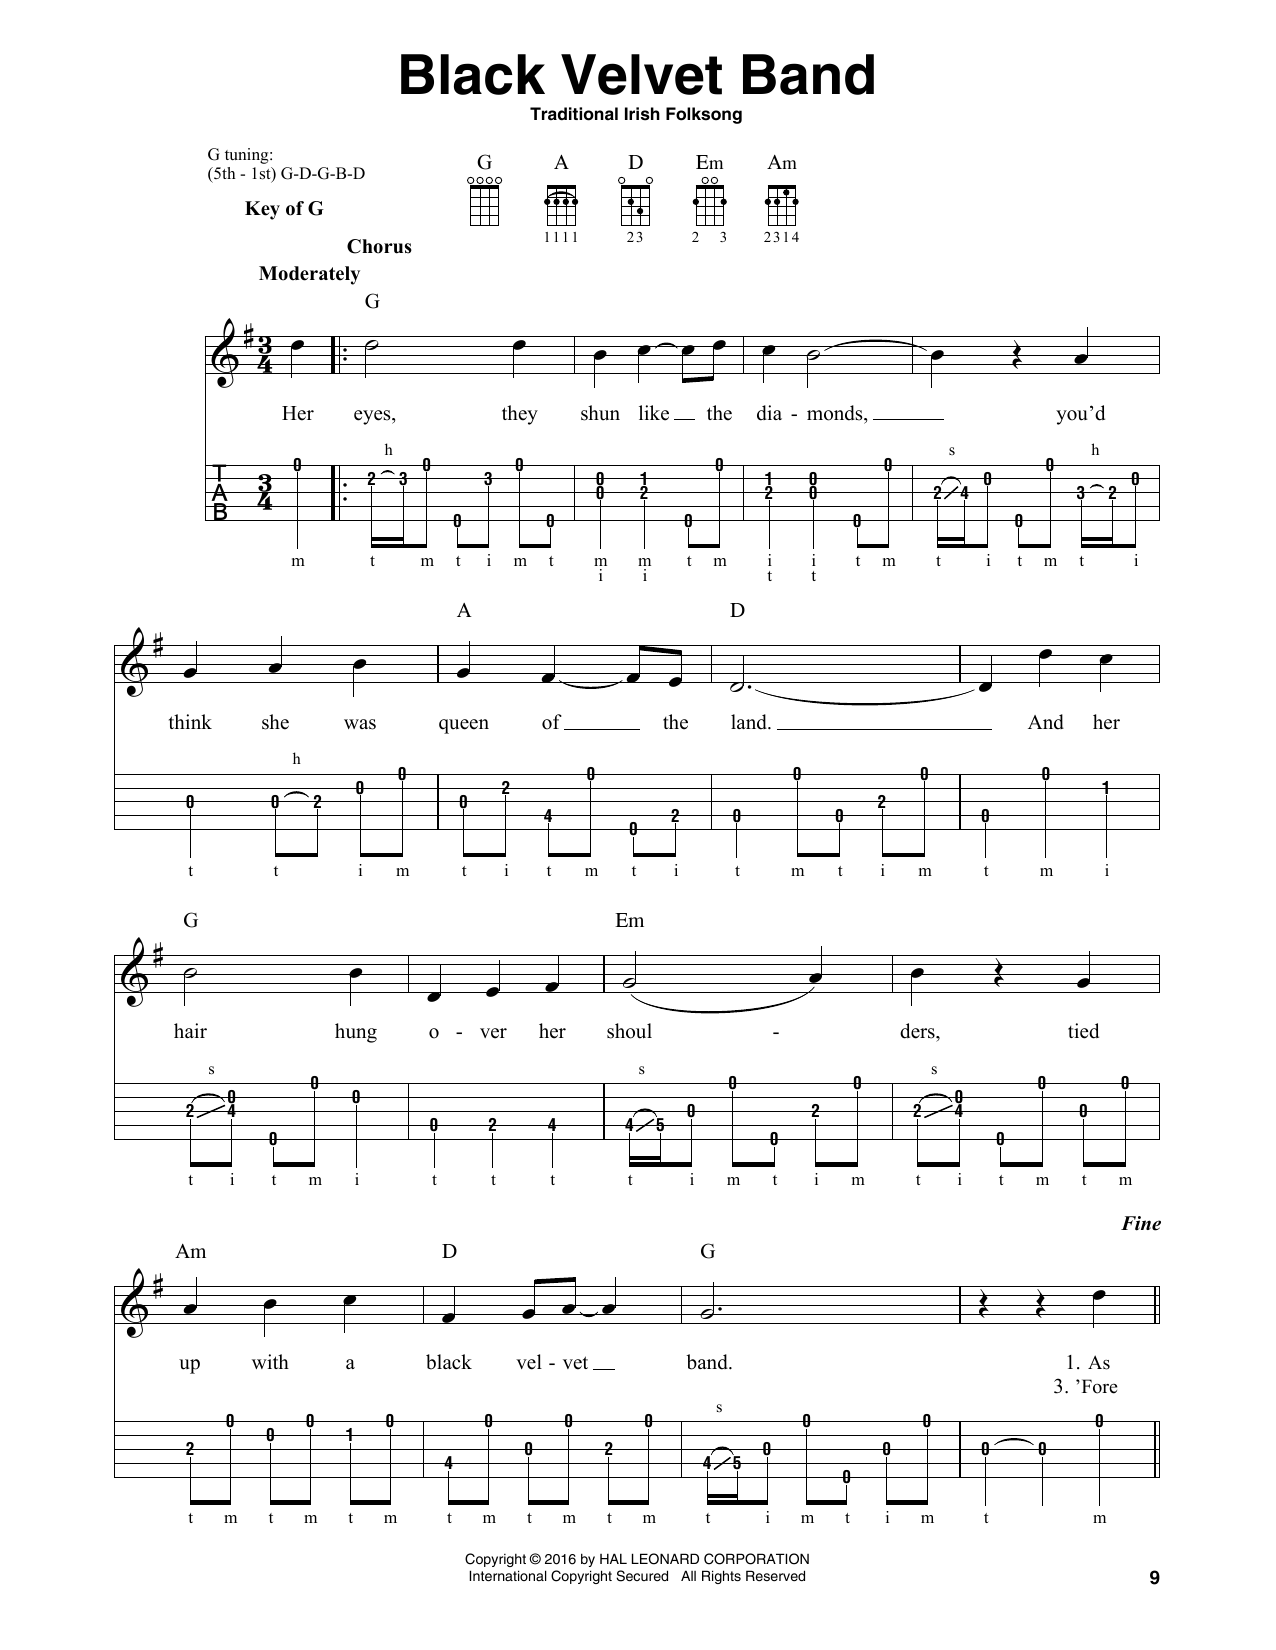 Traditional Irish Folk Song Black Velvet Band Sheet Music Notes & Chords for Ukulele - Download or Print PDF